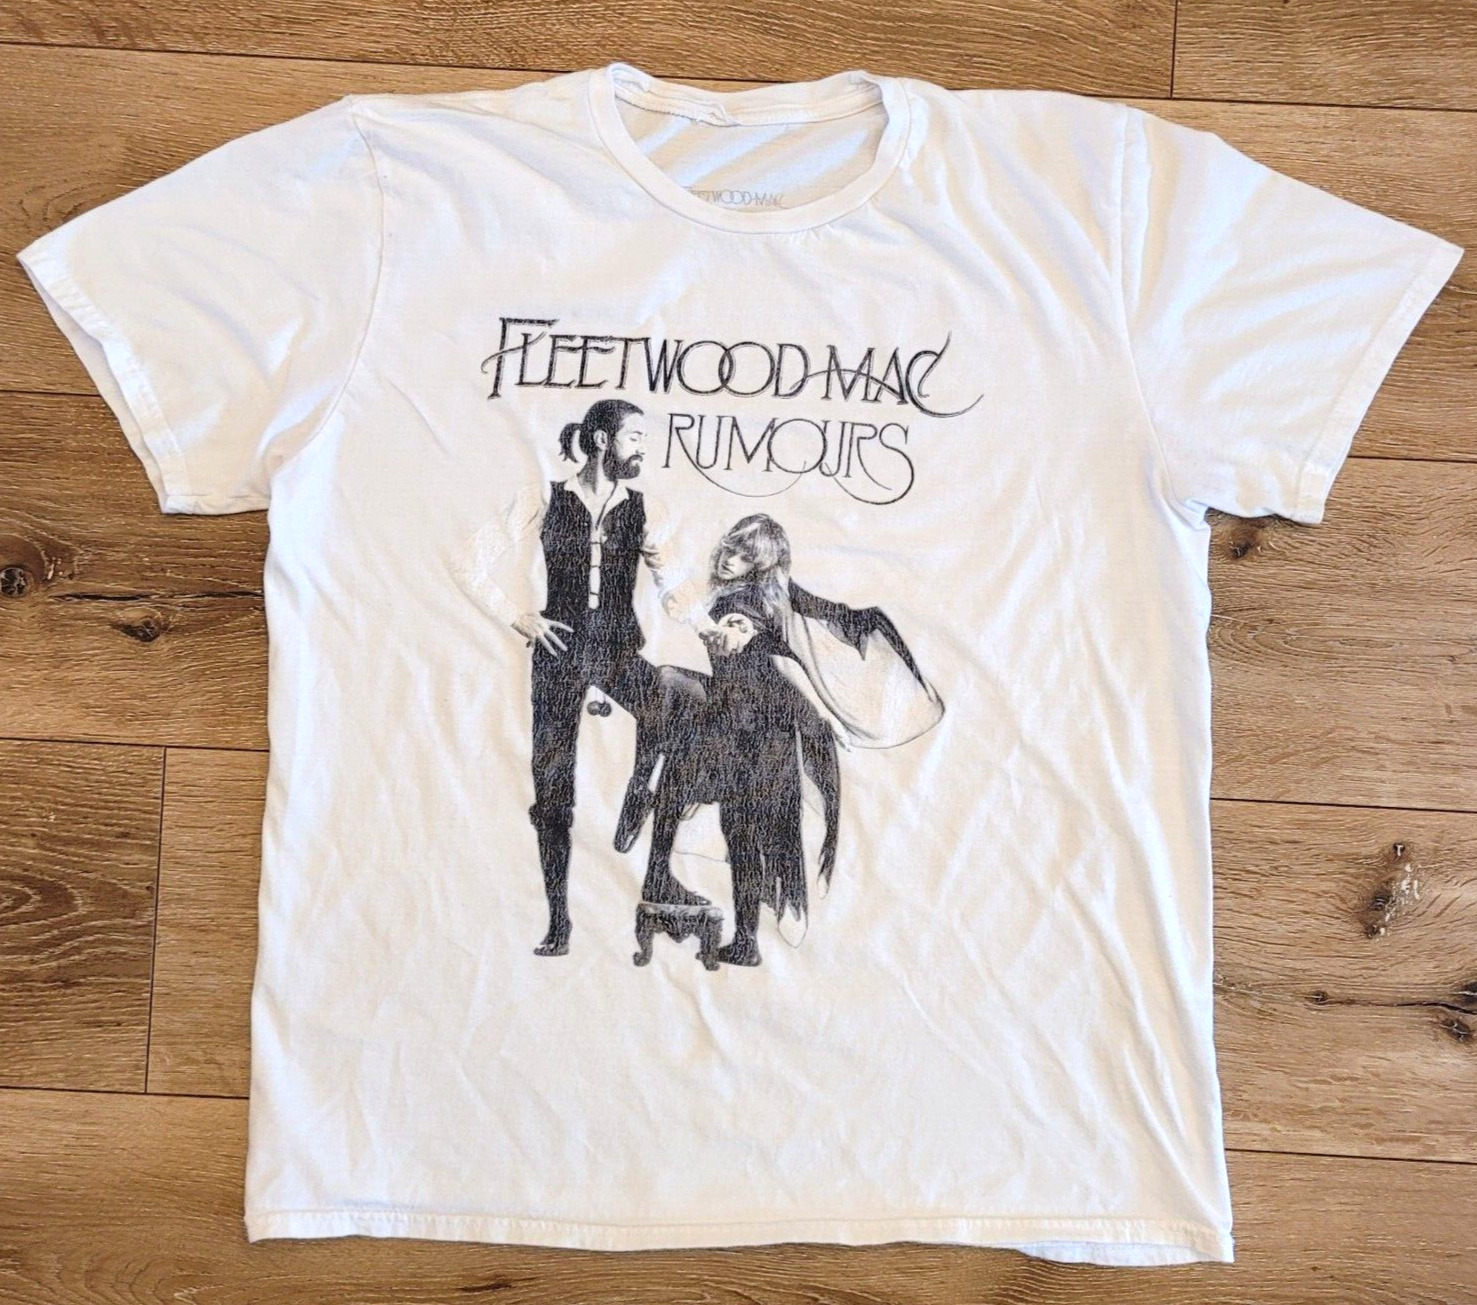 Fleetwood Mac Rumors Album Cover Concert Gypsy Music Unisex T Shirt Size Large L